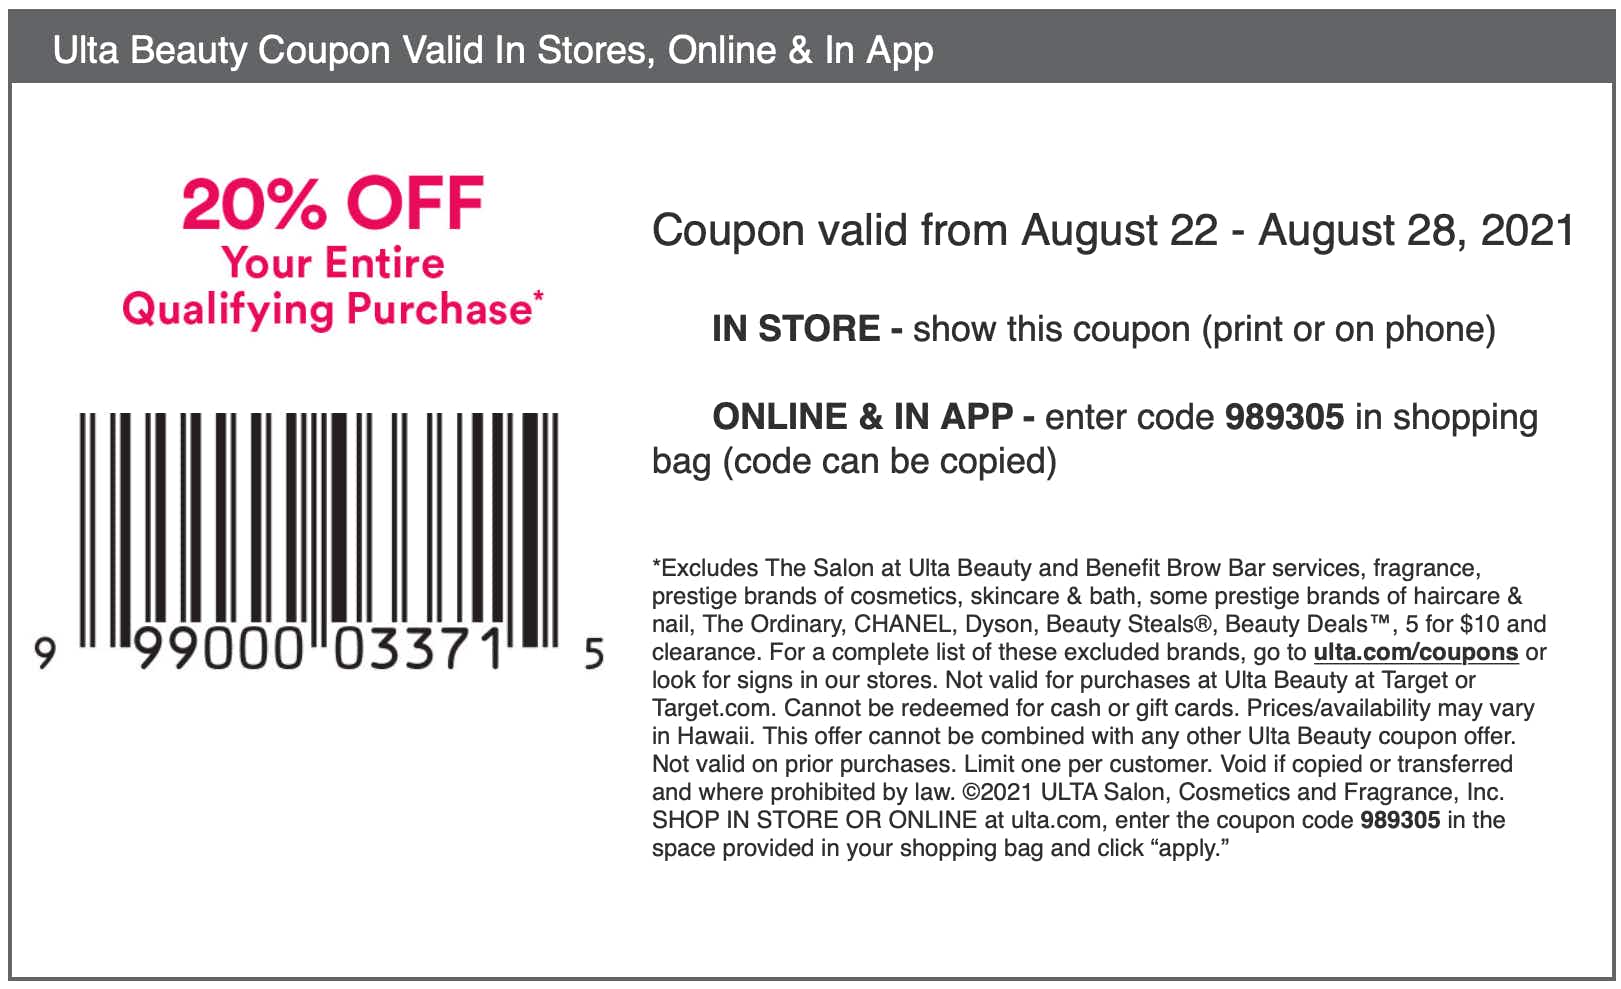 ulta coupon valid through august 28